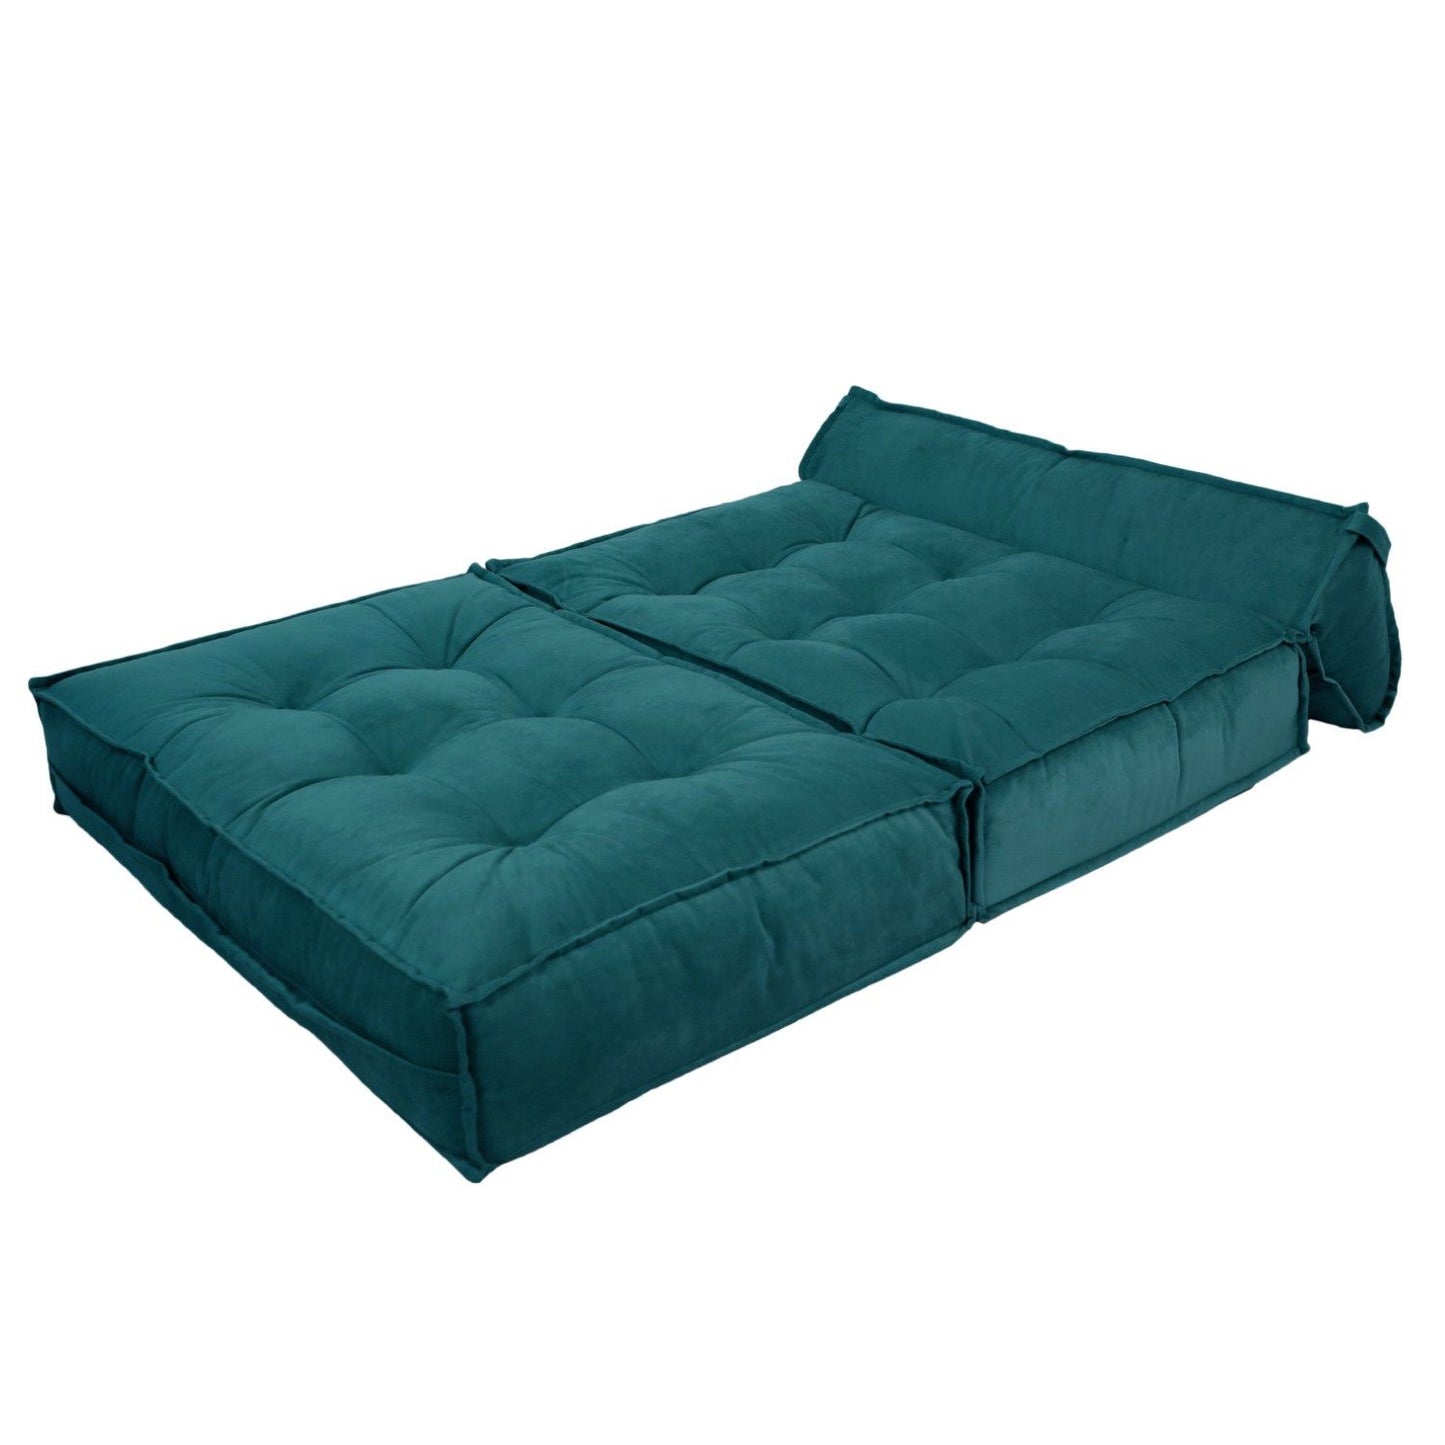 Mocca - Petrol Green - 2-Seat Sofa-Bed